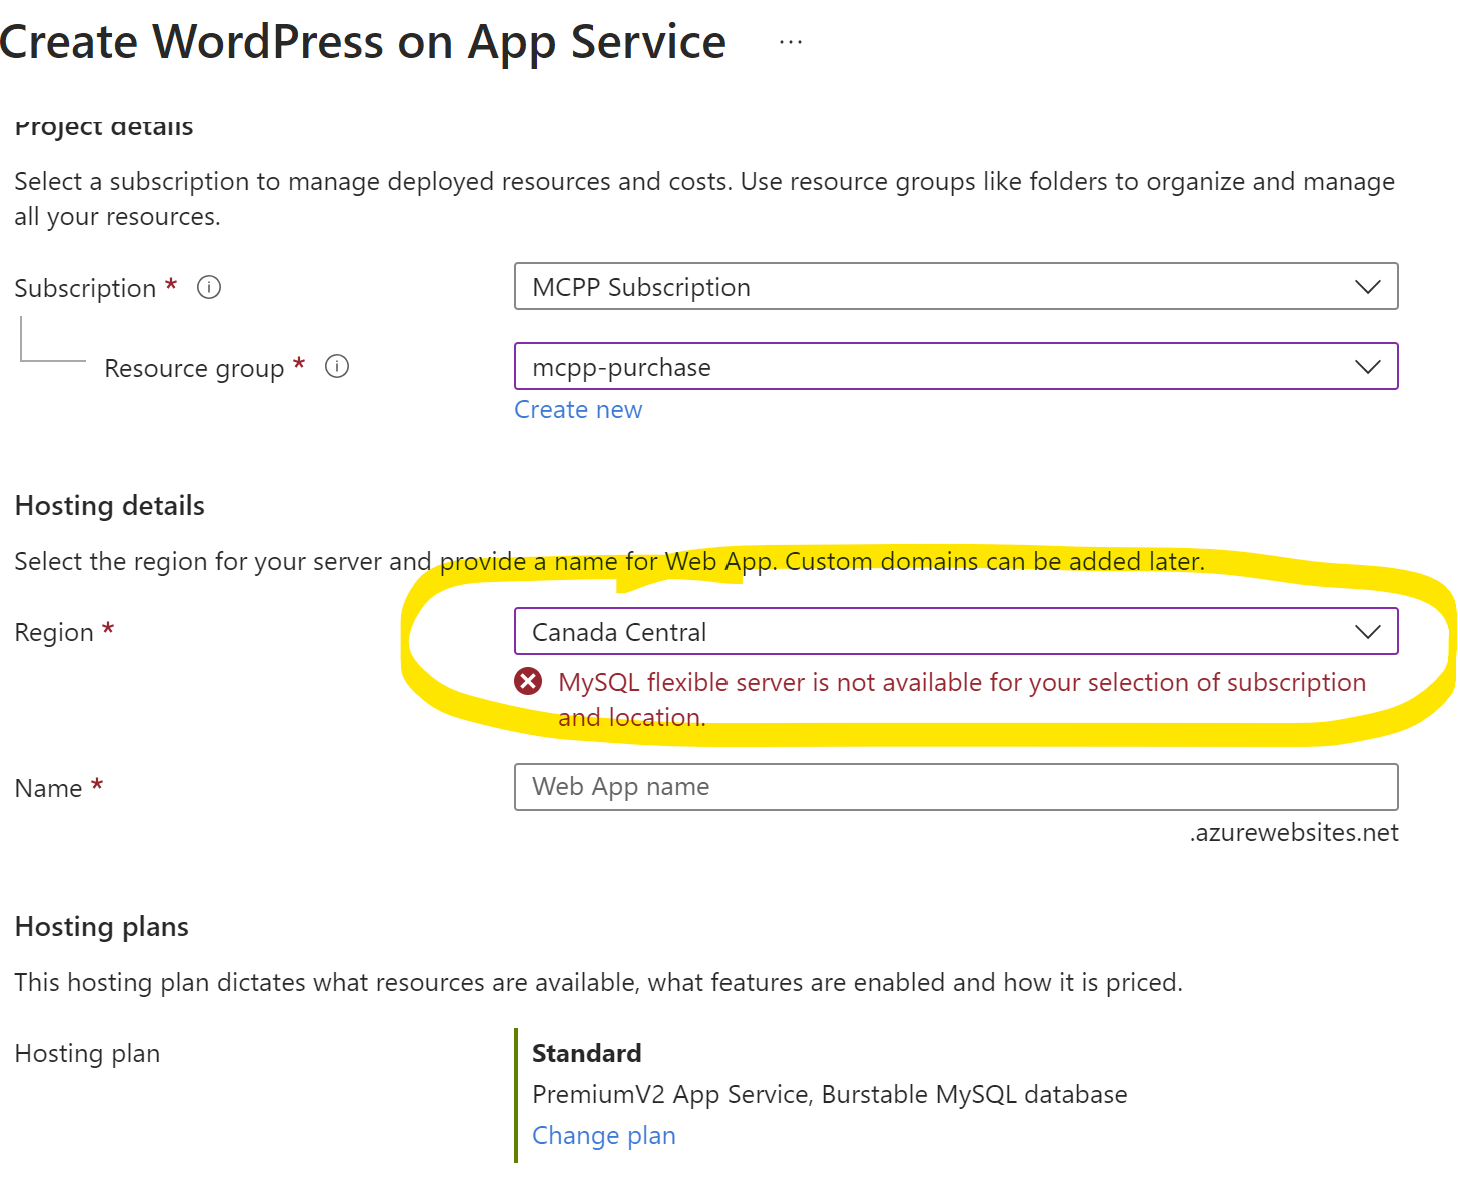 Create WordPress on App Service Error